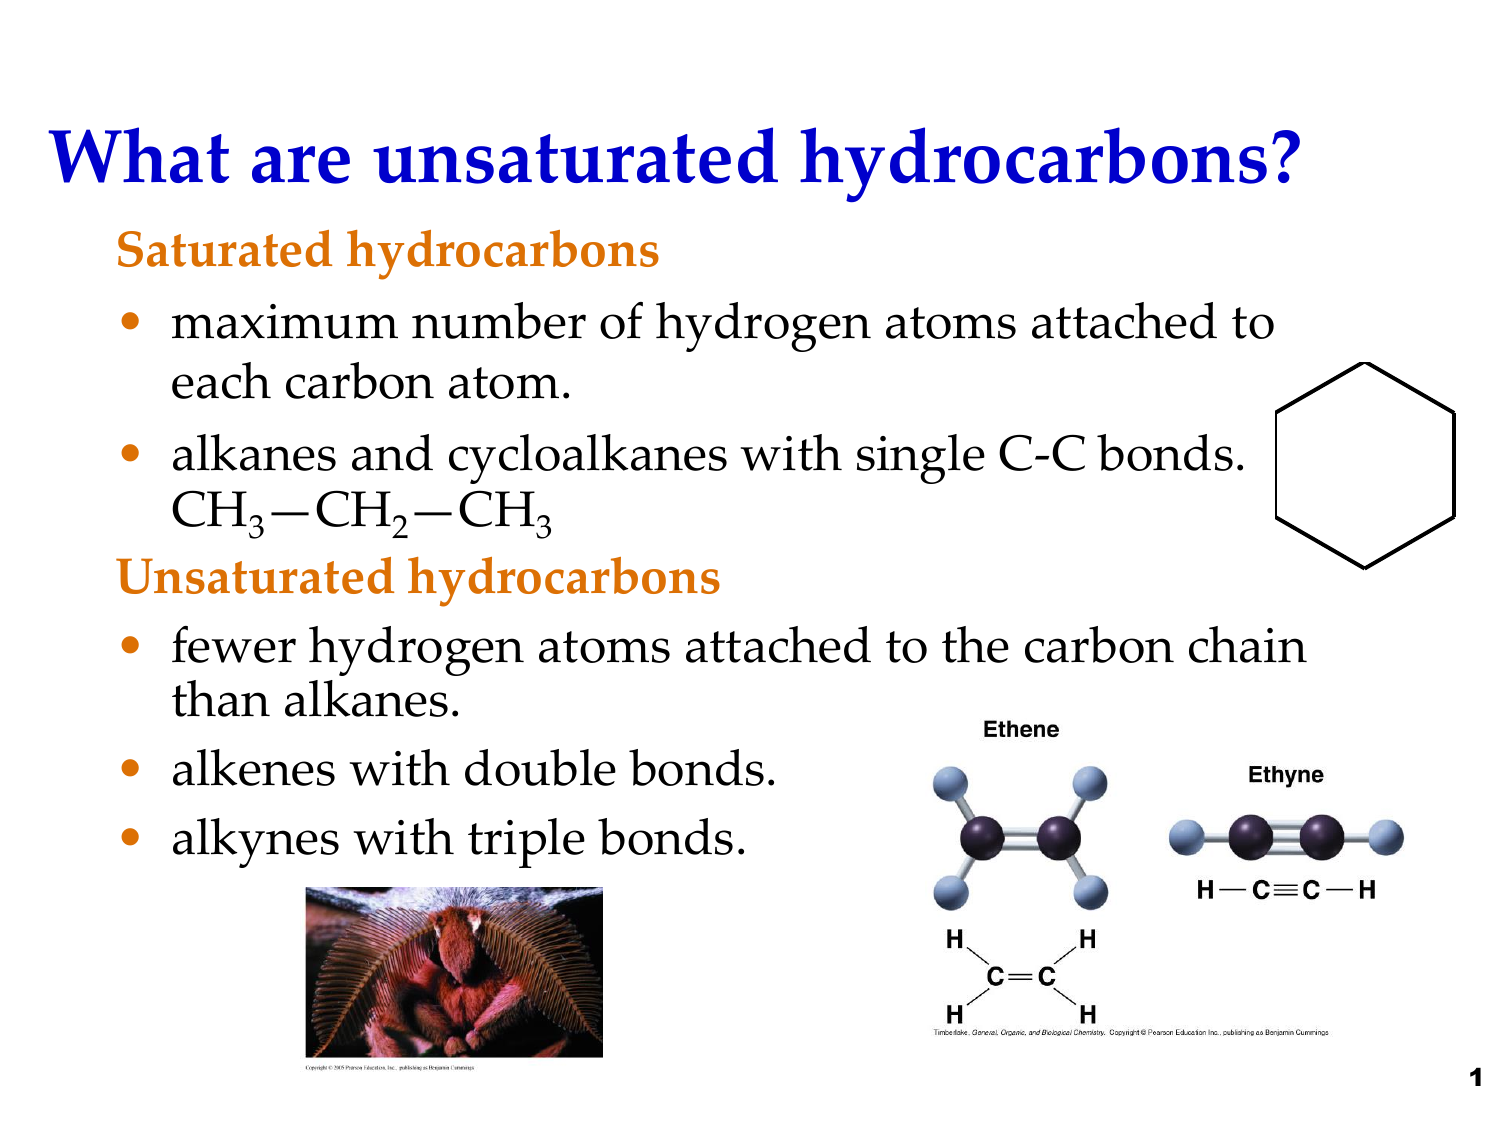 hydrocarbon saturation